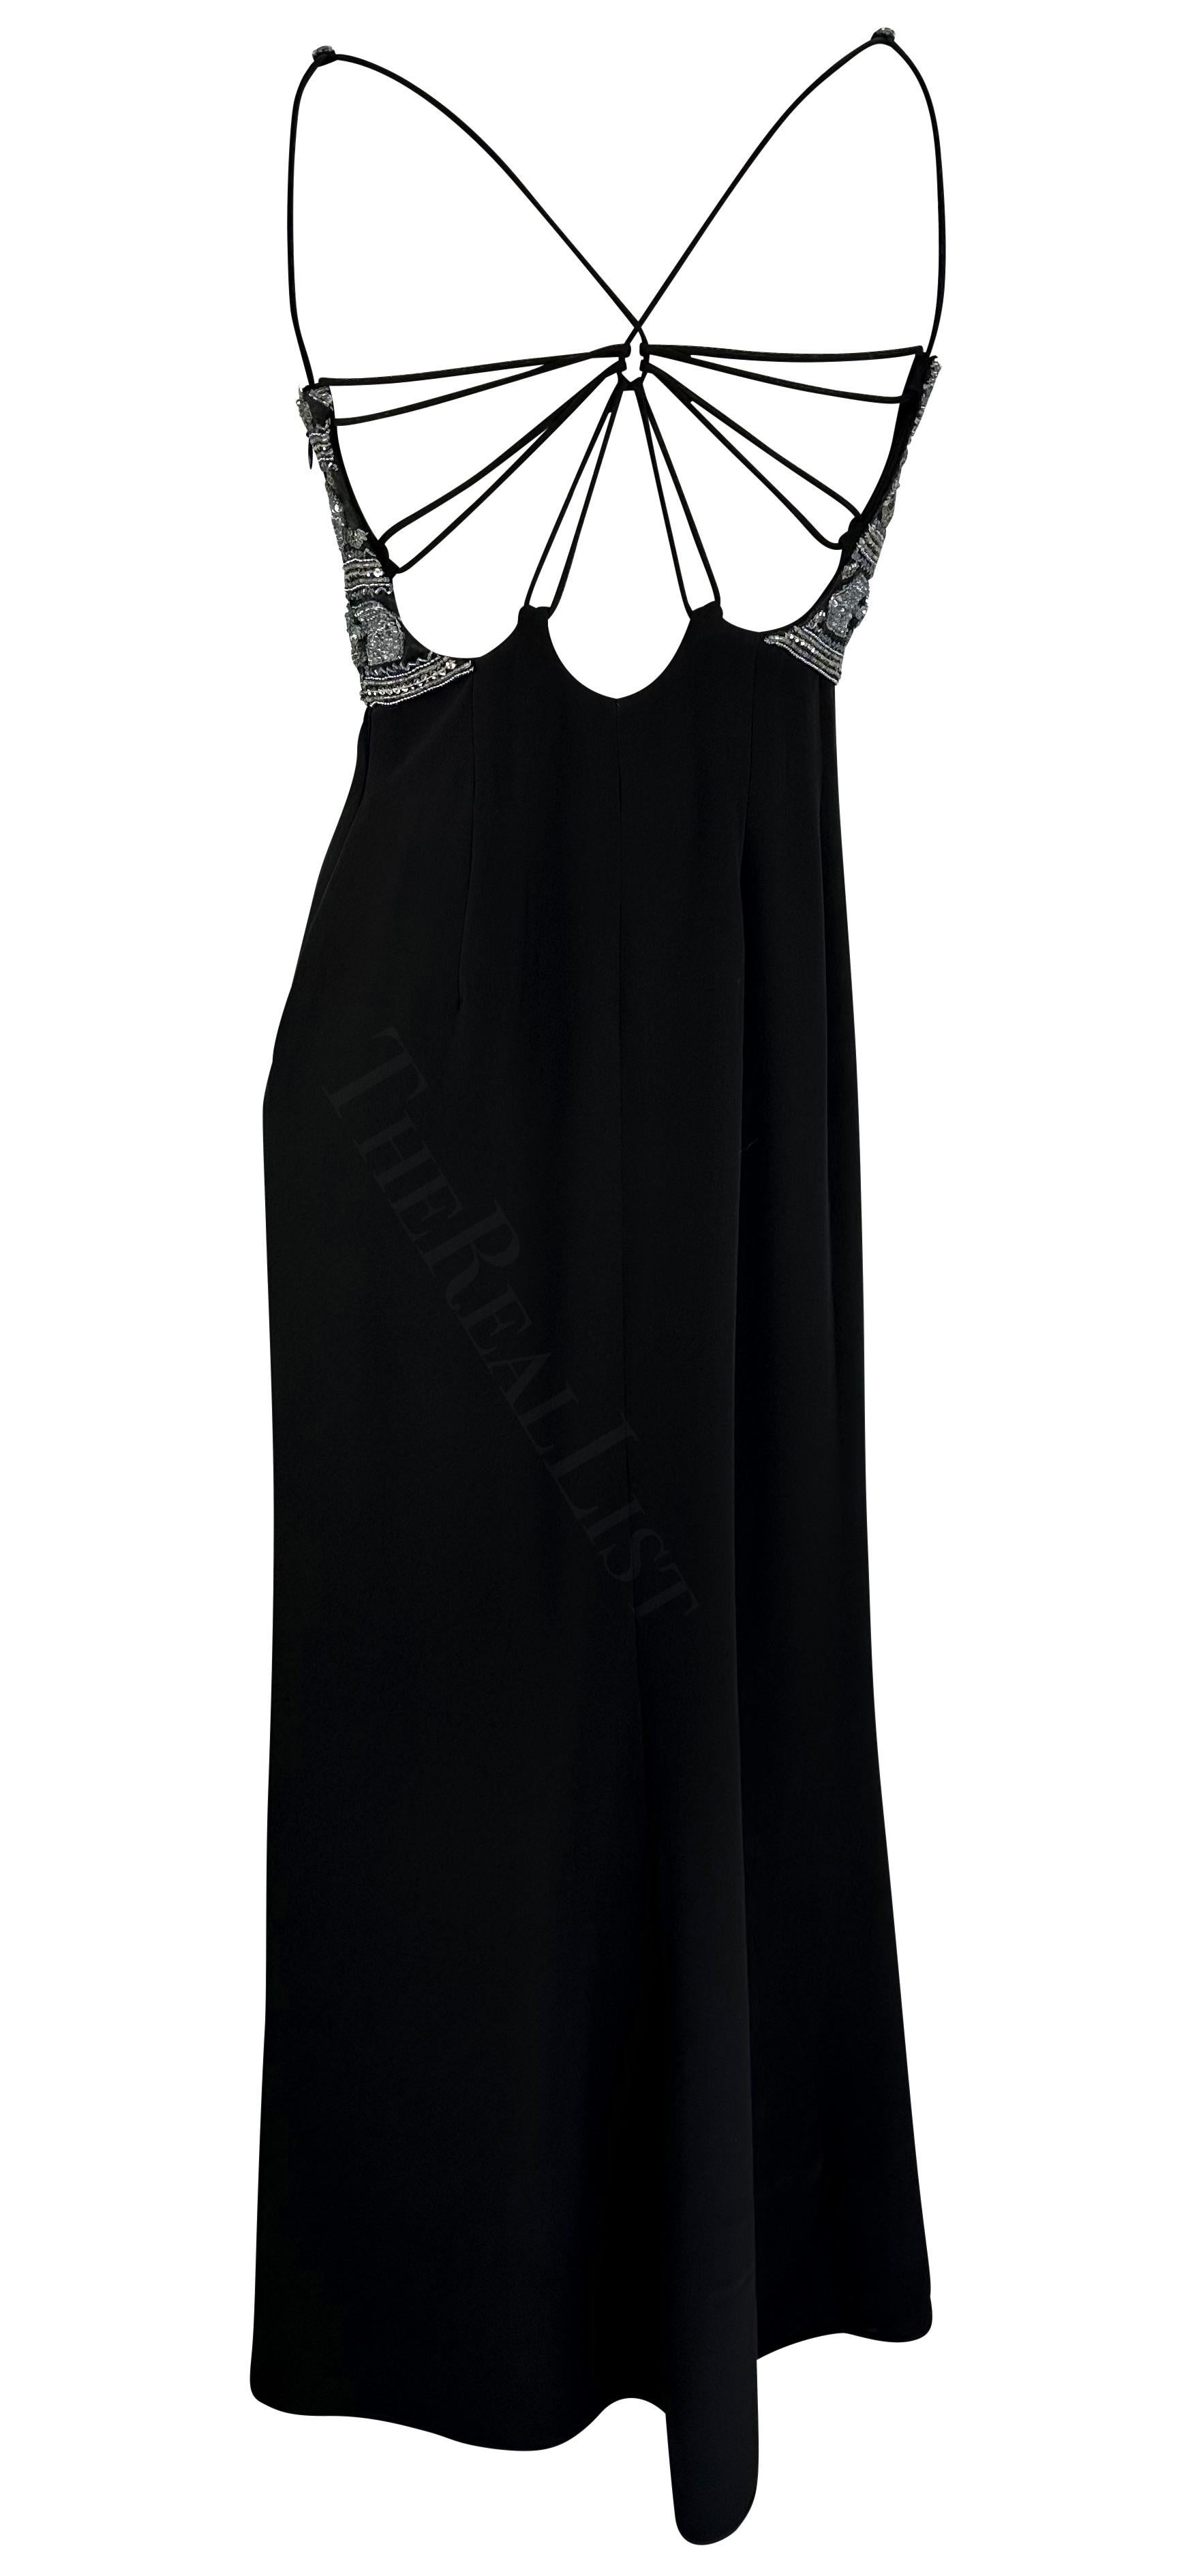 S/S 1996 Giorgio Armani Backless Black Silver Beaded Dress For Sale 4